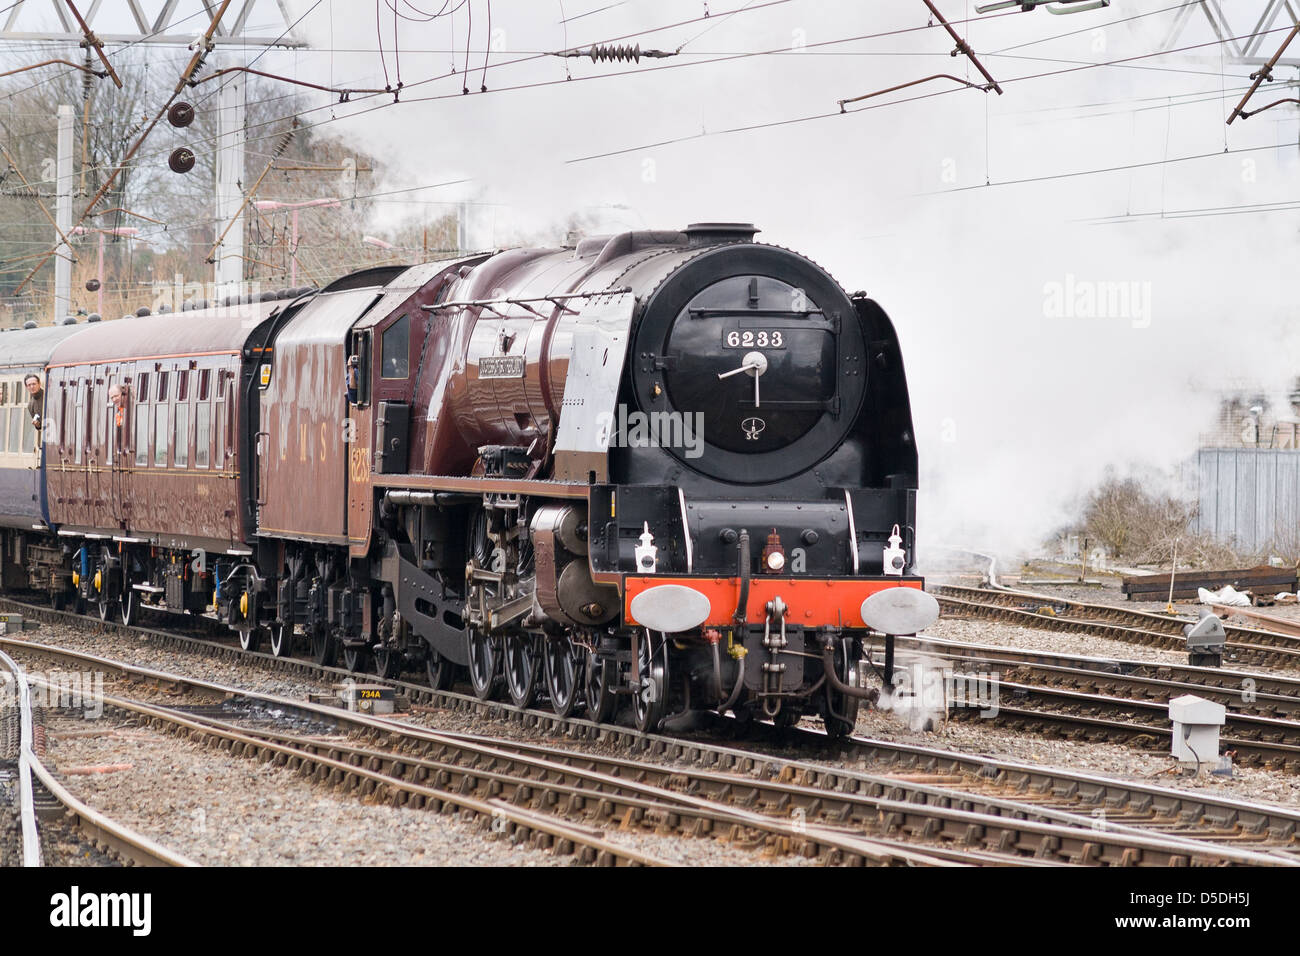 A steam locomotive pulling a passenger train on the main line near Carlisle, England Stock Photo